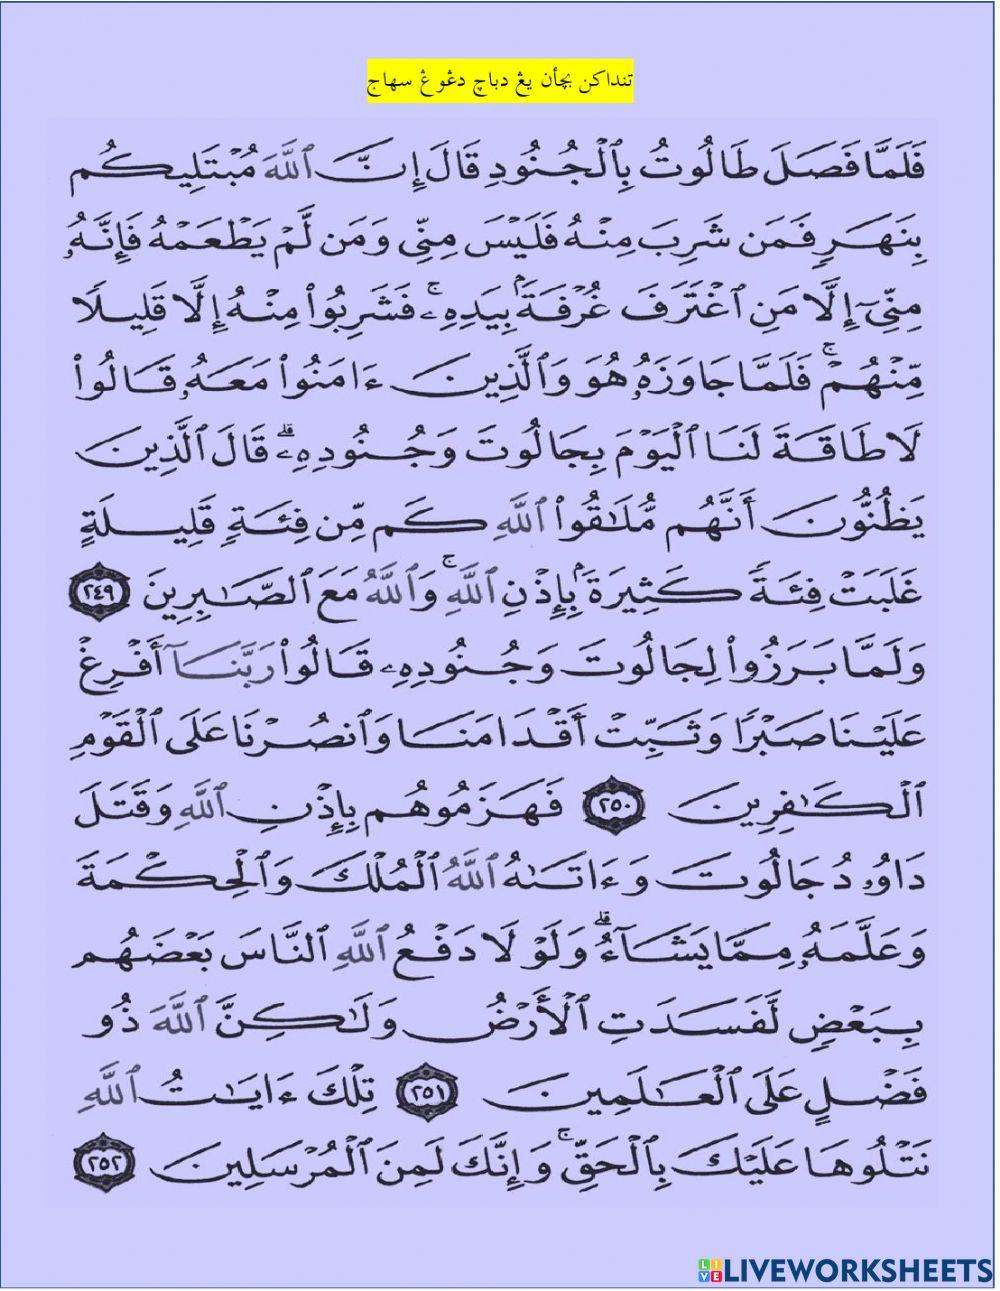 Surah Al-Baqarah ayat 251-252